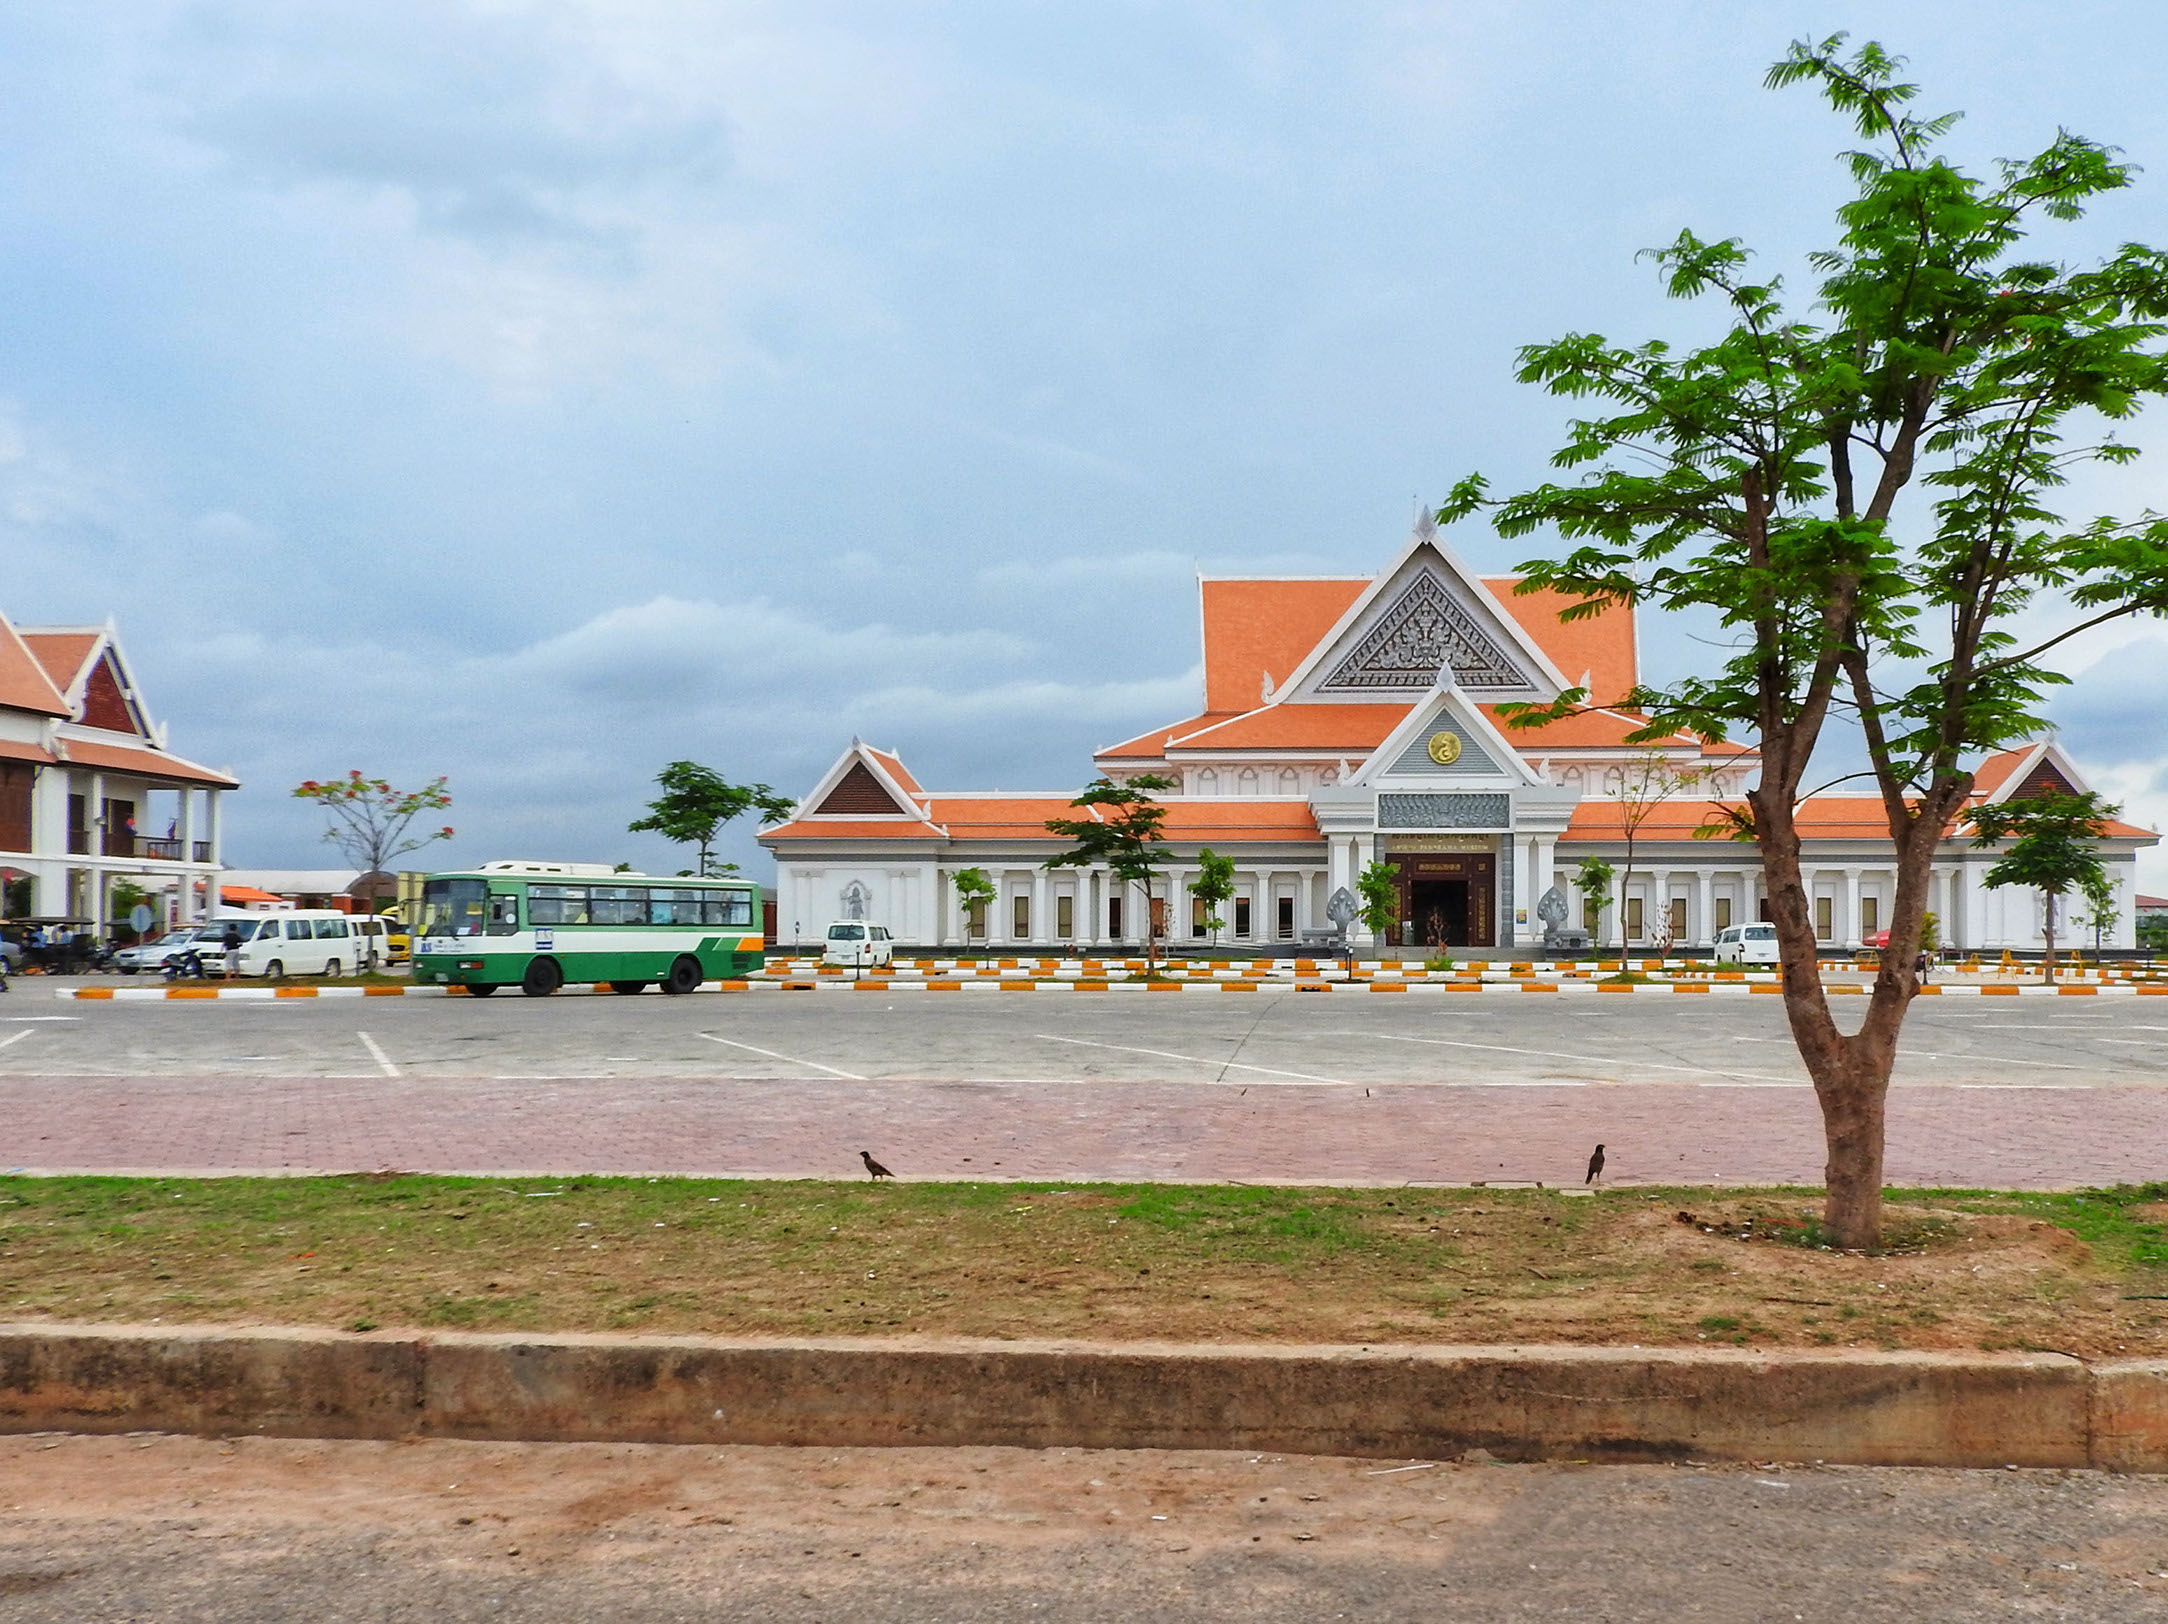 Bus station in Siem Reap